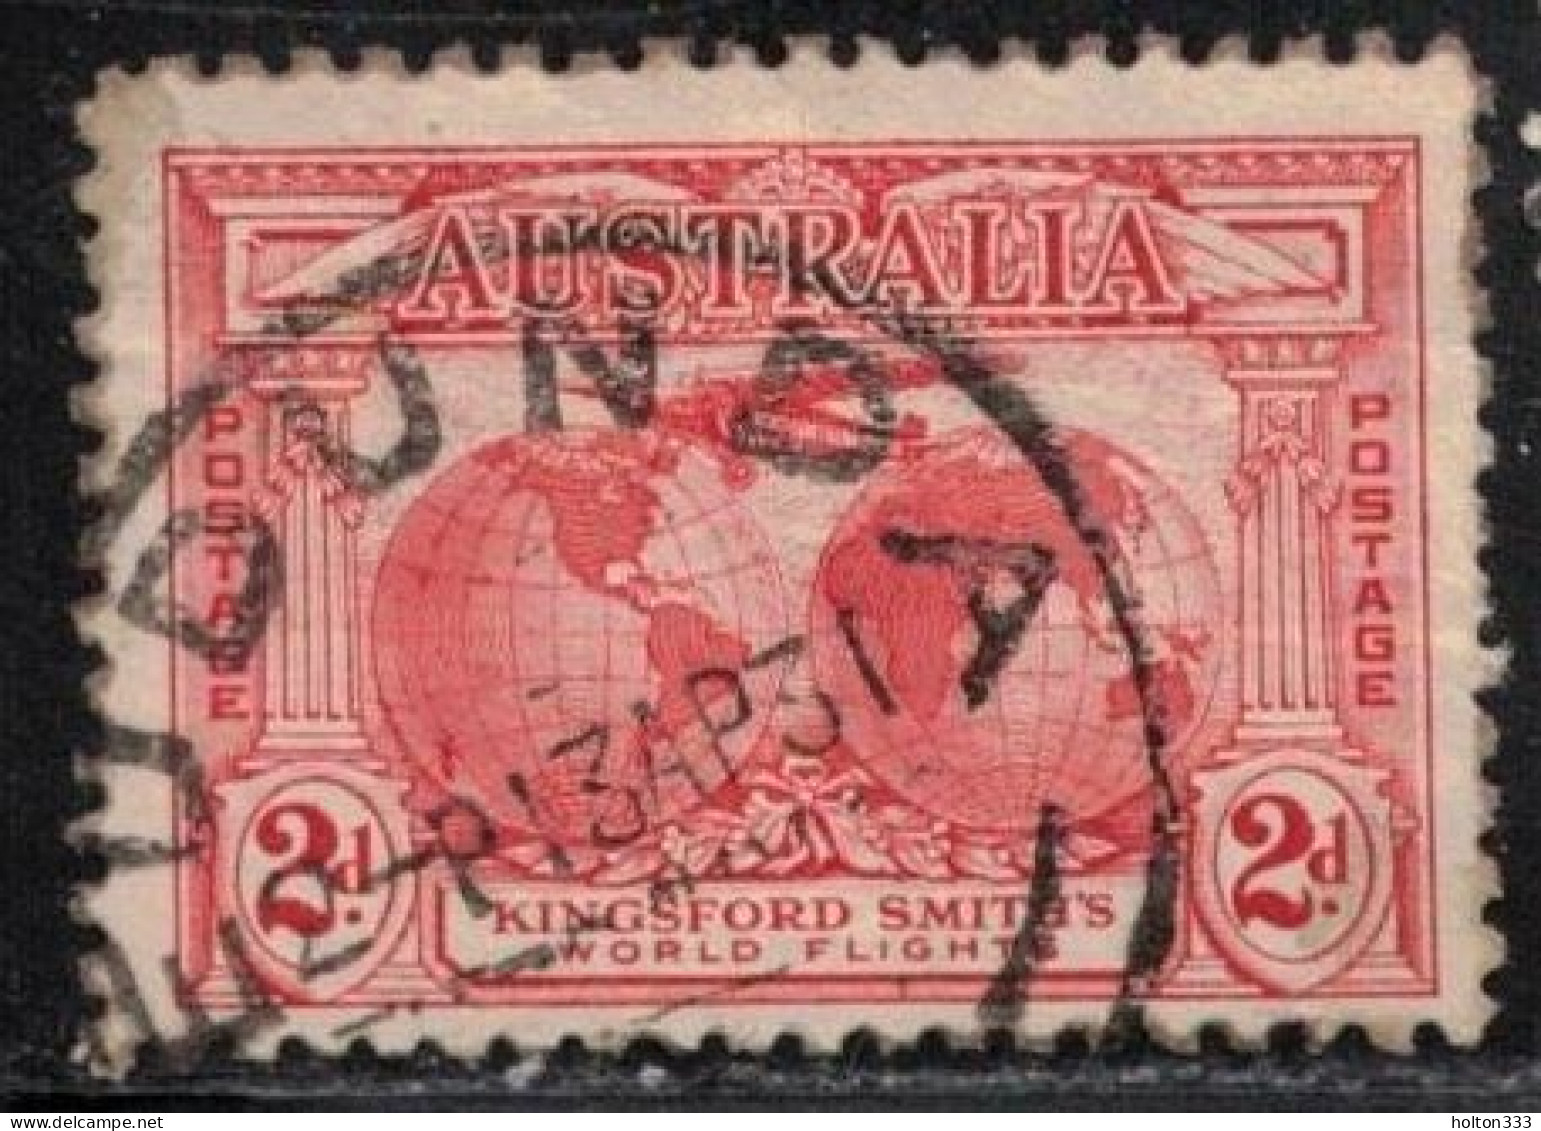 AUSTRALIA Scott # 111 Used - Kingsford Smith's World Flight - Used Stamps